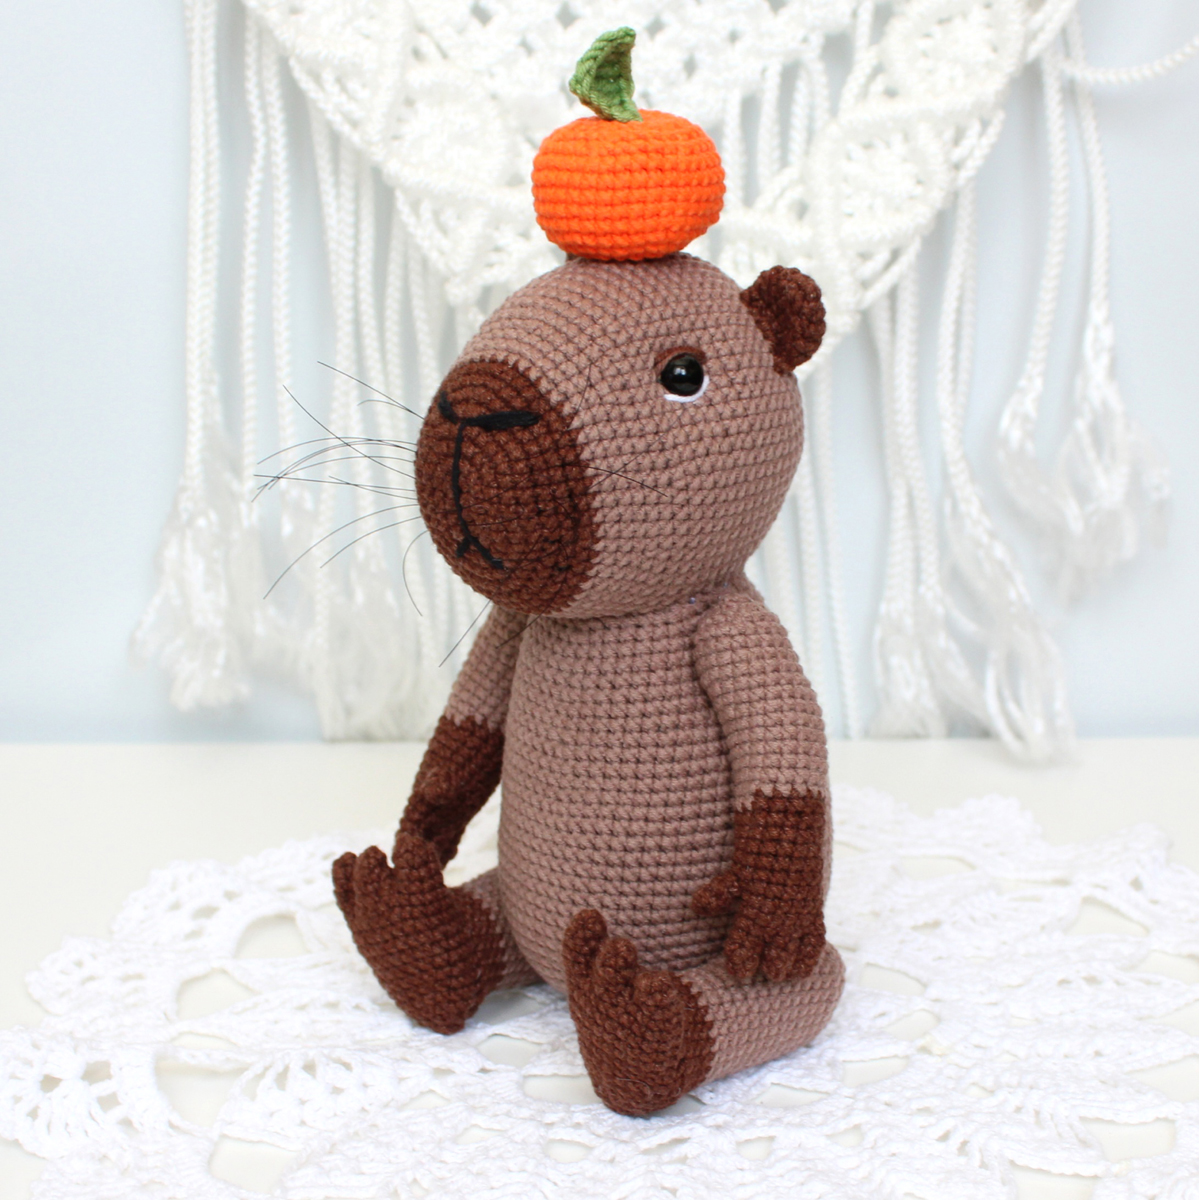 Capybara Crochet Pattern 🍊➡️ shop.amigurumi.today/product/amigur…

#amigurumi #crochet #amigurumipatterns #crochetpatterns #handmade #crafting